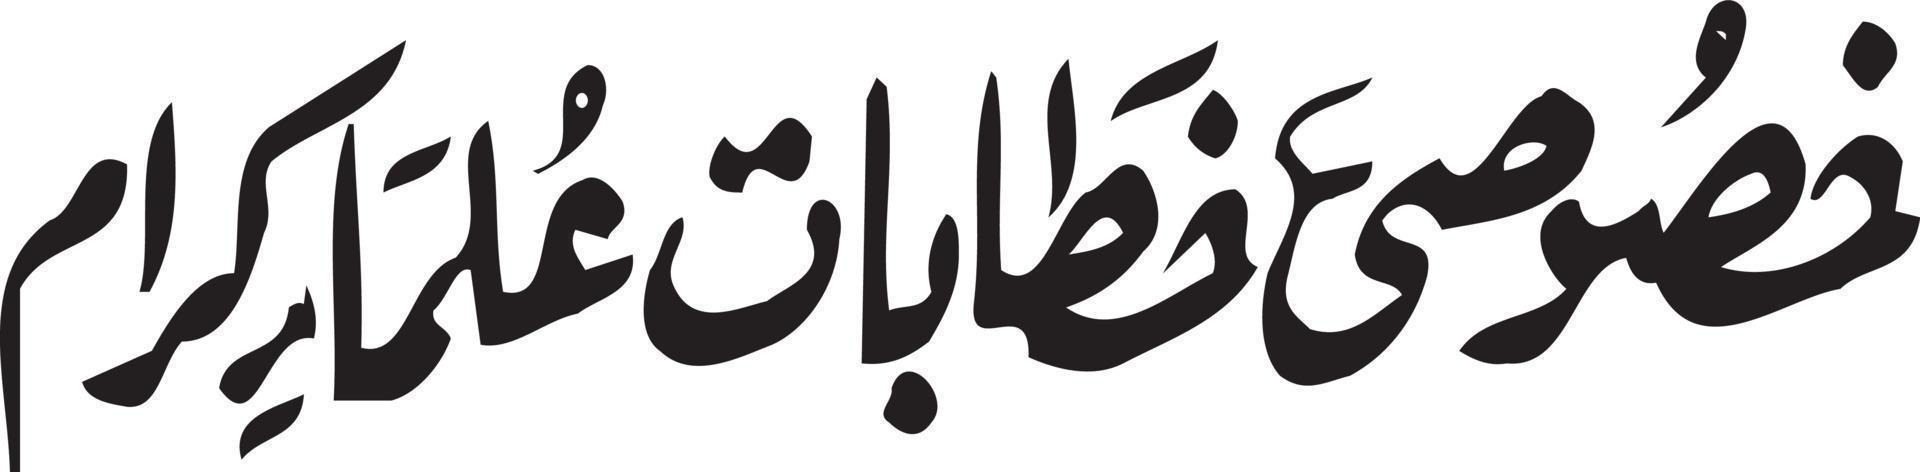 khasosi khtabat olma kram titel Islamitisch Urdu Arabisch schoonschrift vrij vector